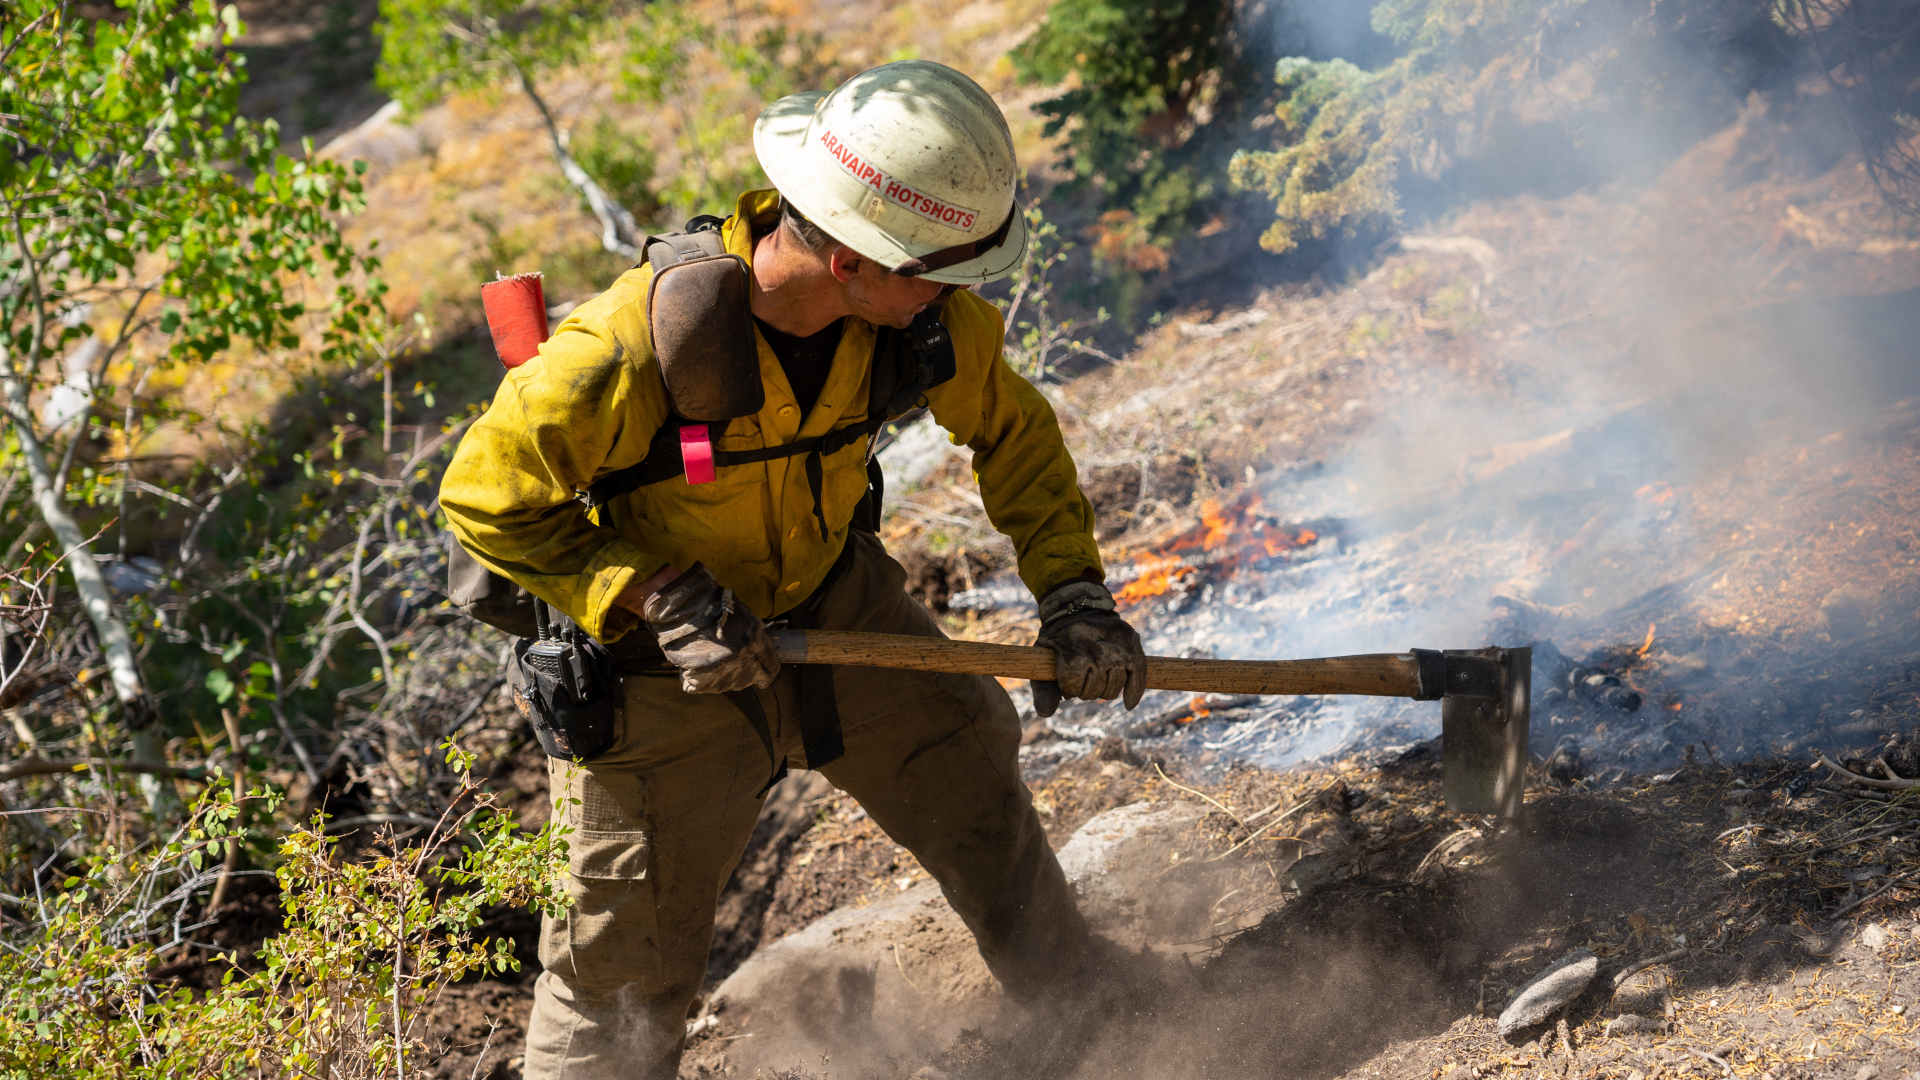 The Aravipa Hotshots work on the Caldor Fire near South Lake Tahoe on Sept. 11, 2021.